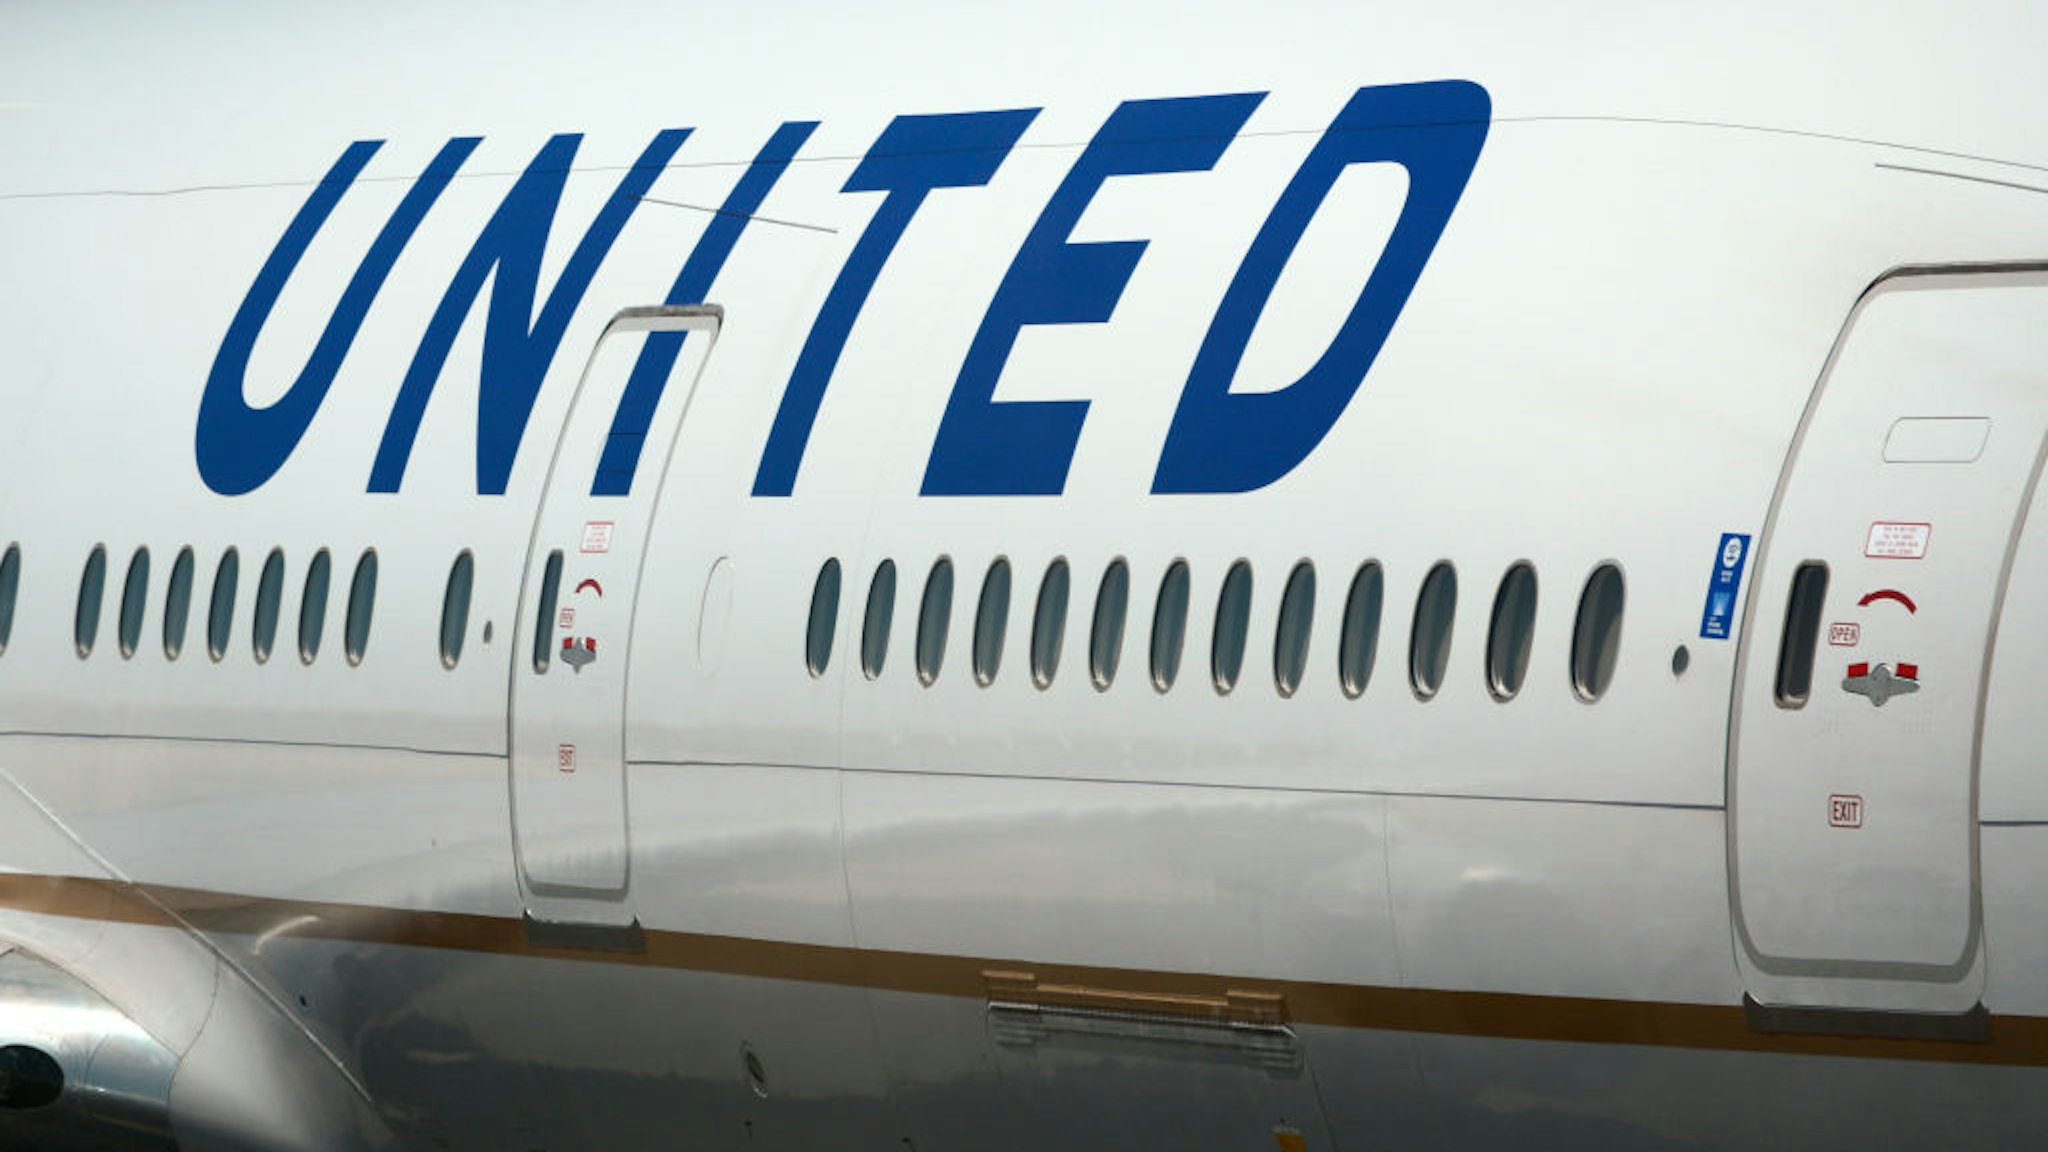 DENVER, COLORADO - JUNE 20, 2019: A United Airlines Boeing 777 passenger aircraft at Denver International Airport in Denver, Colorado.